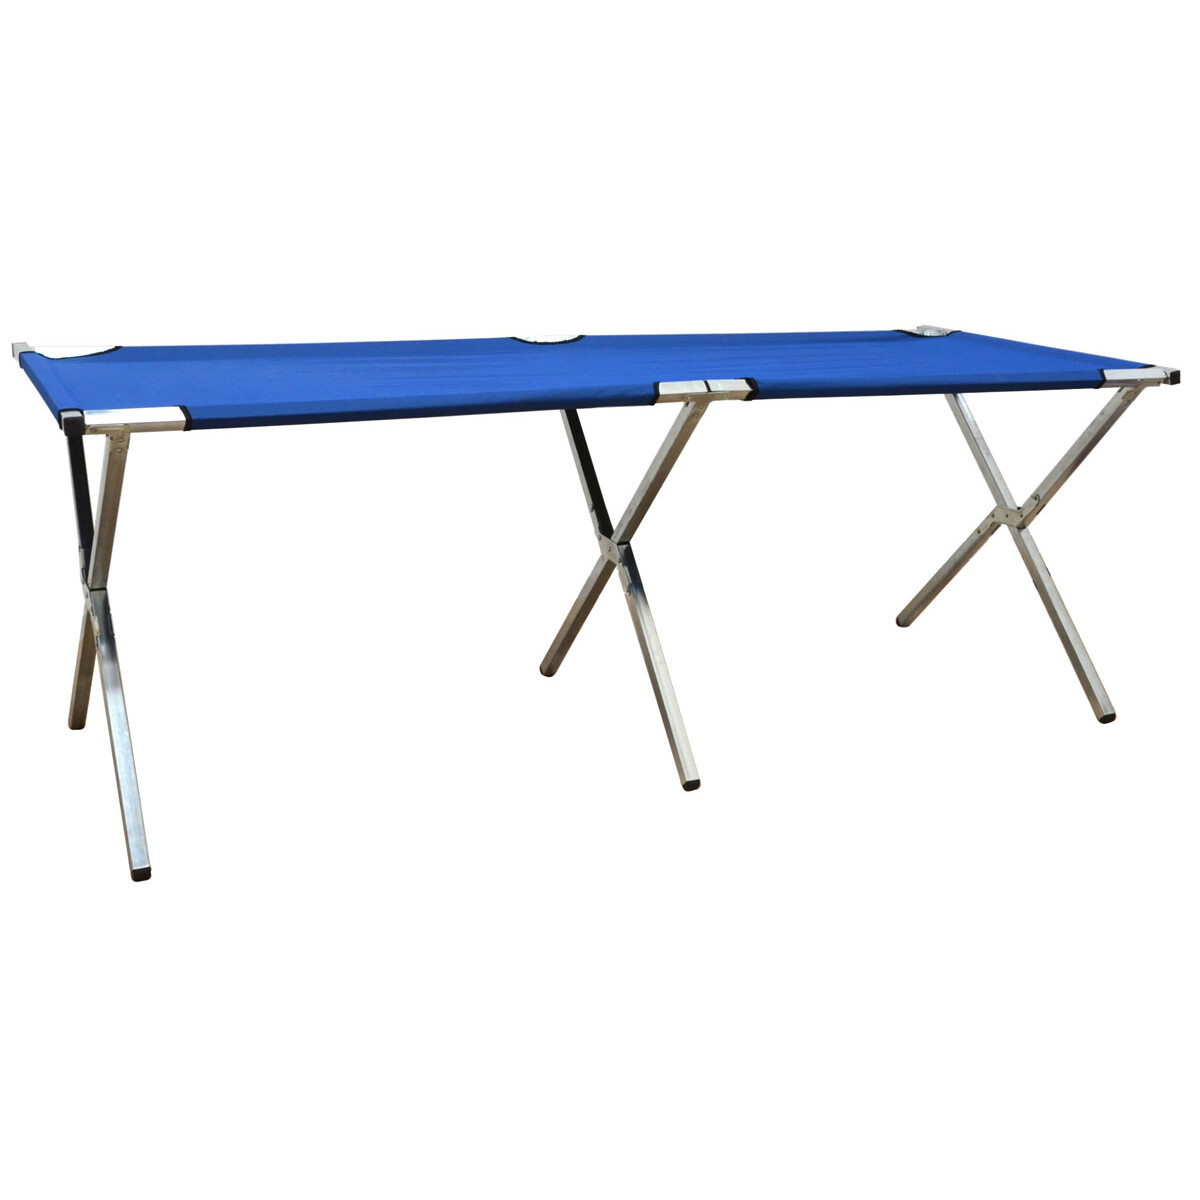 Verkaufsstand Verkaufstisch 205x67x70 cm klappbar Blau